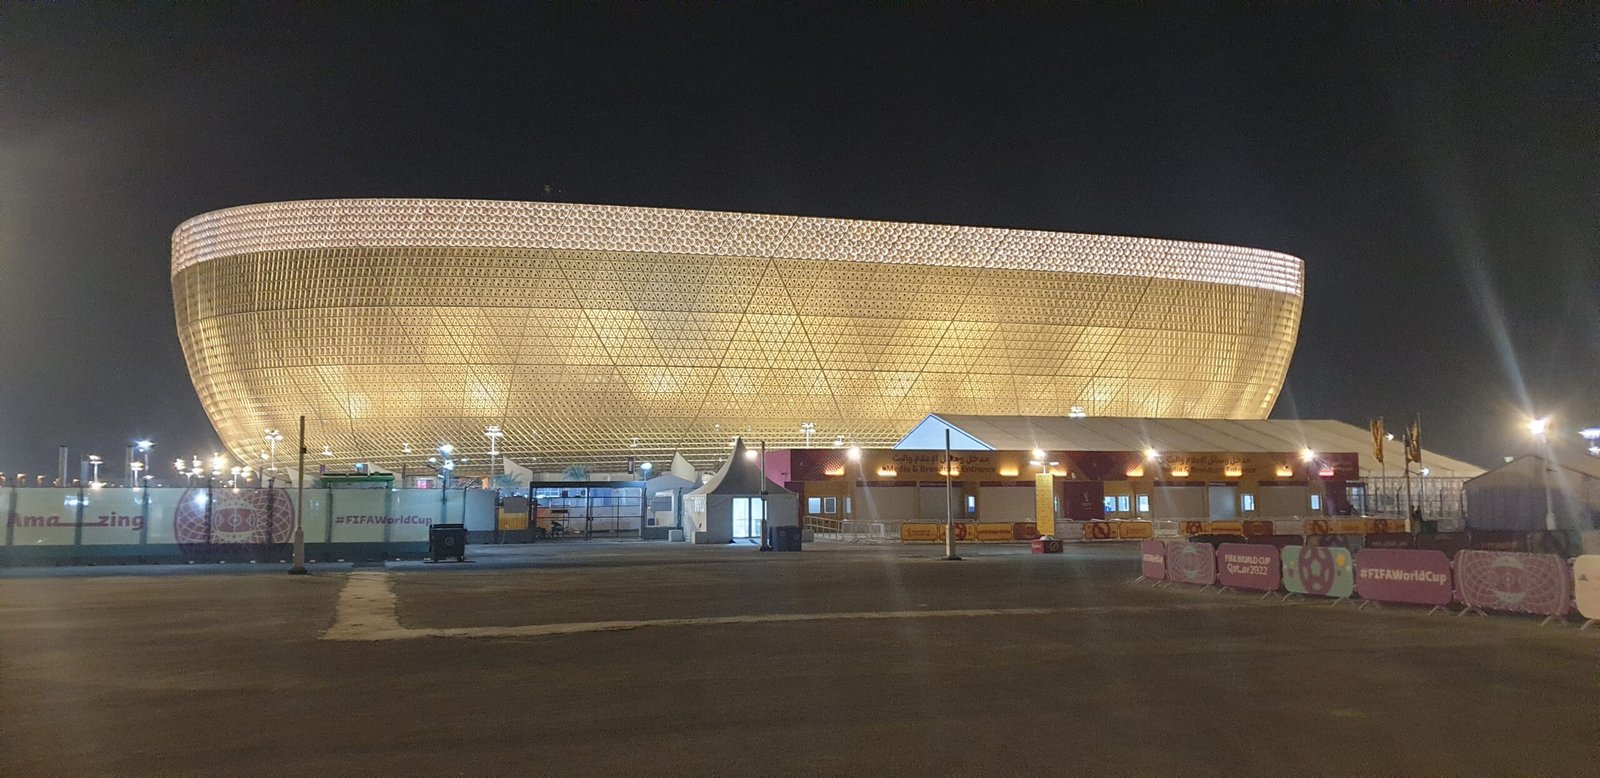 Article 2022 World Cup : Qatar Ready to Host Prestigious World Cup